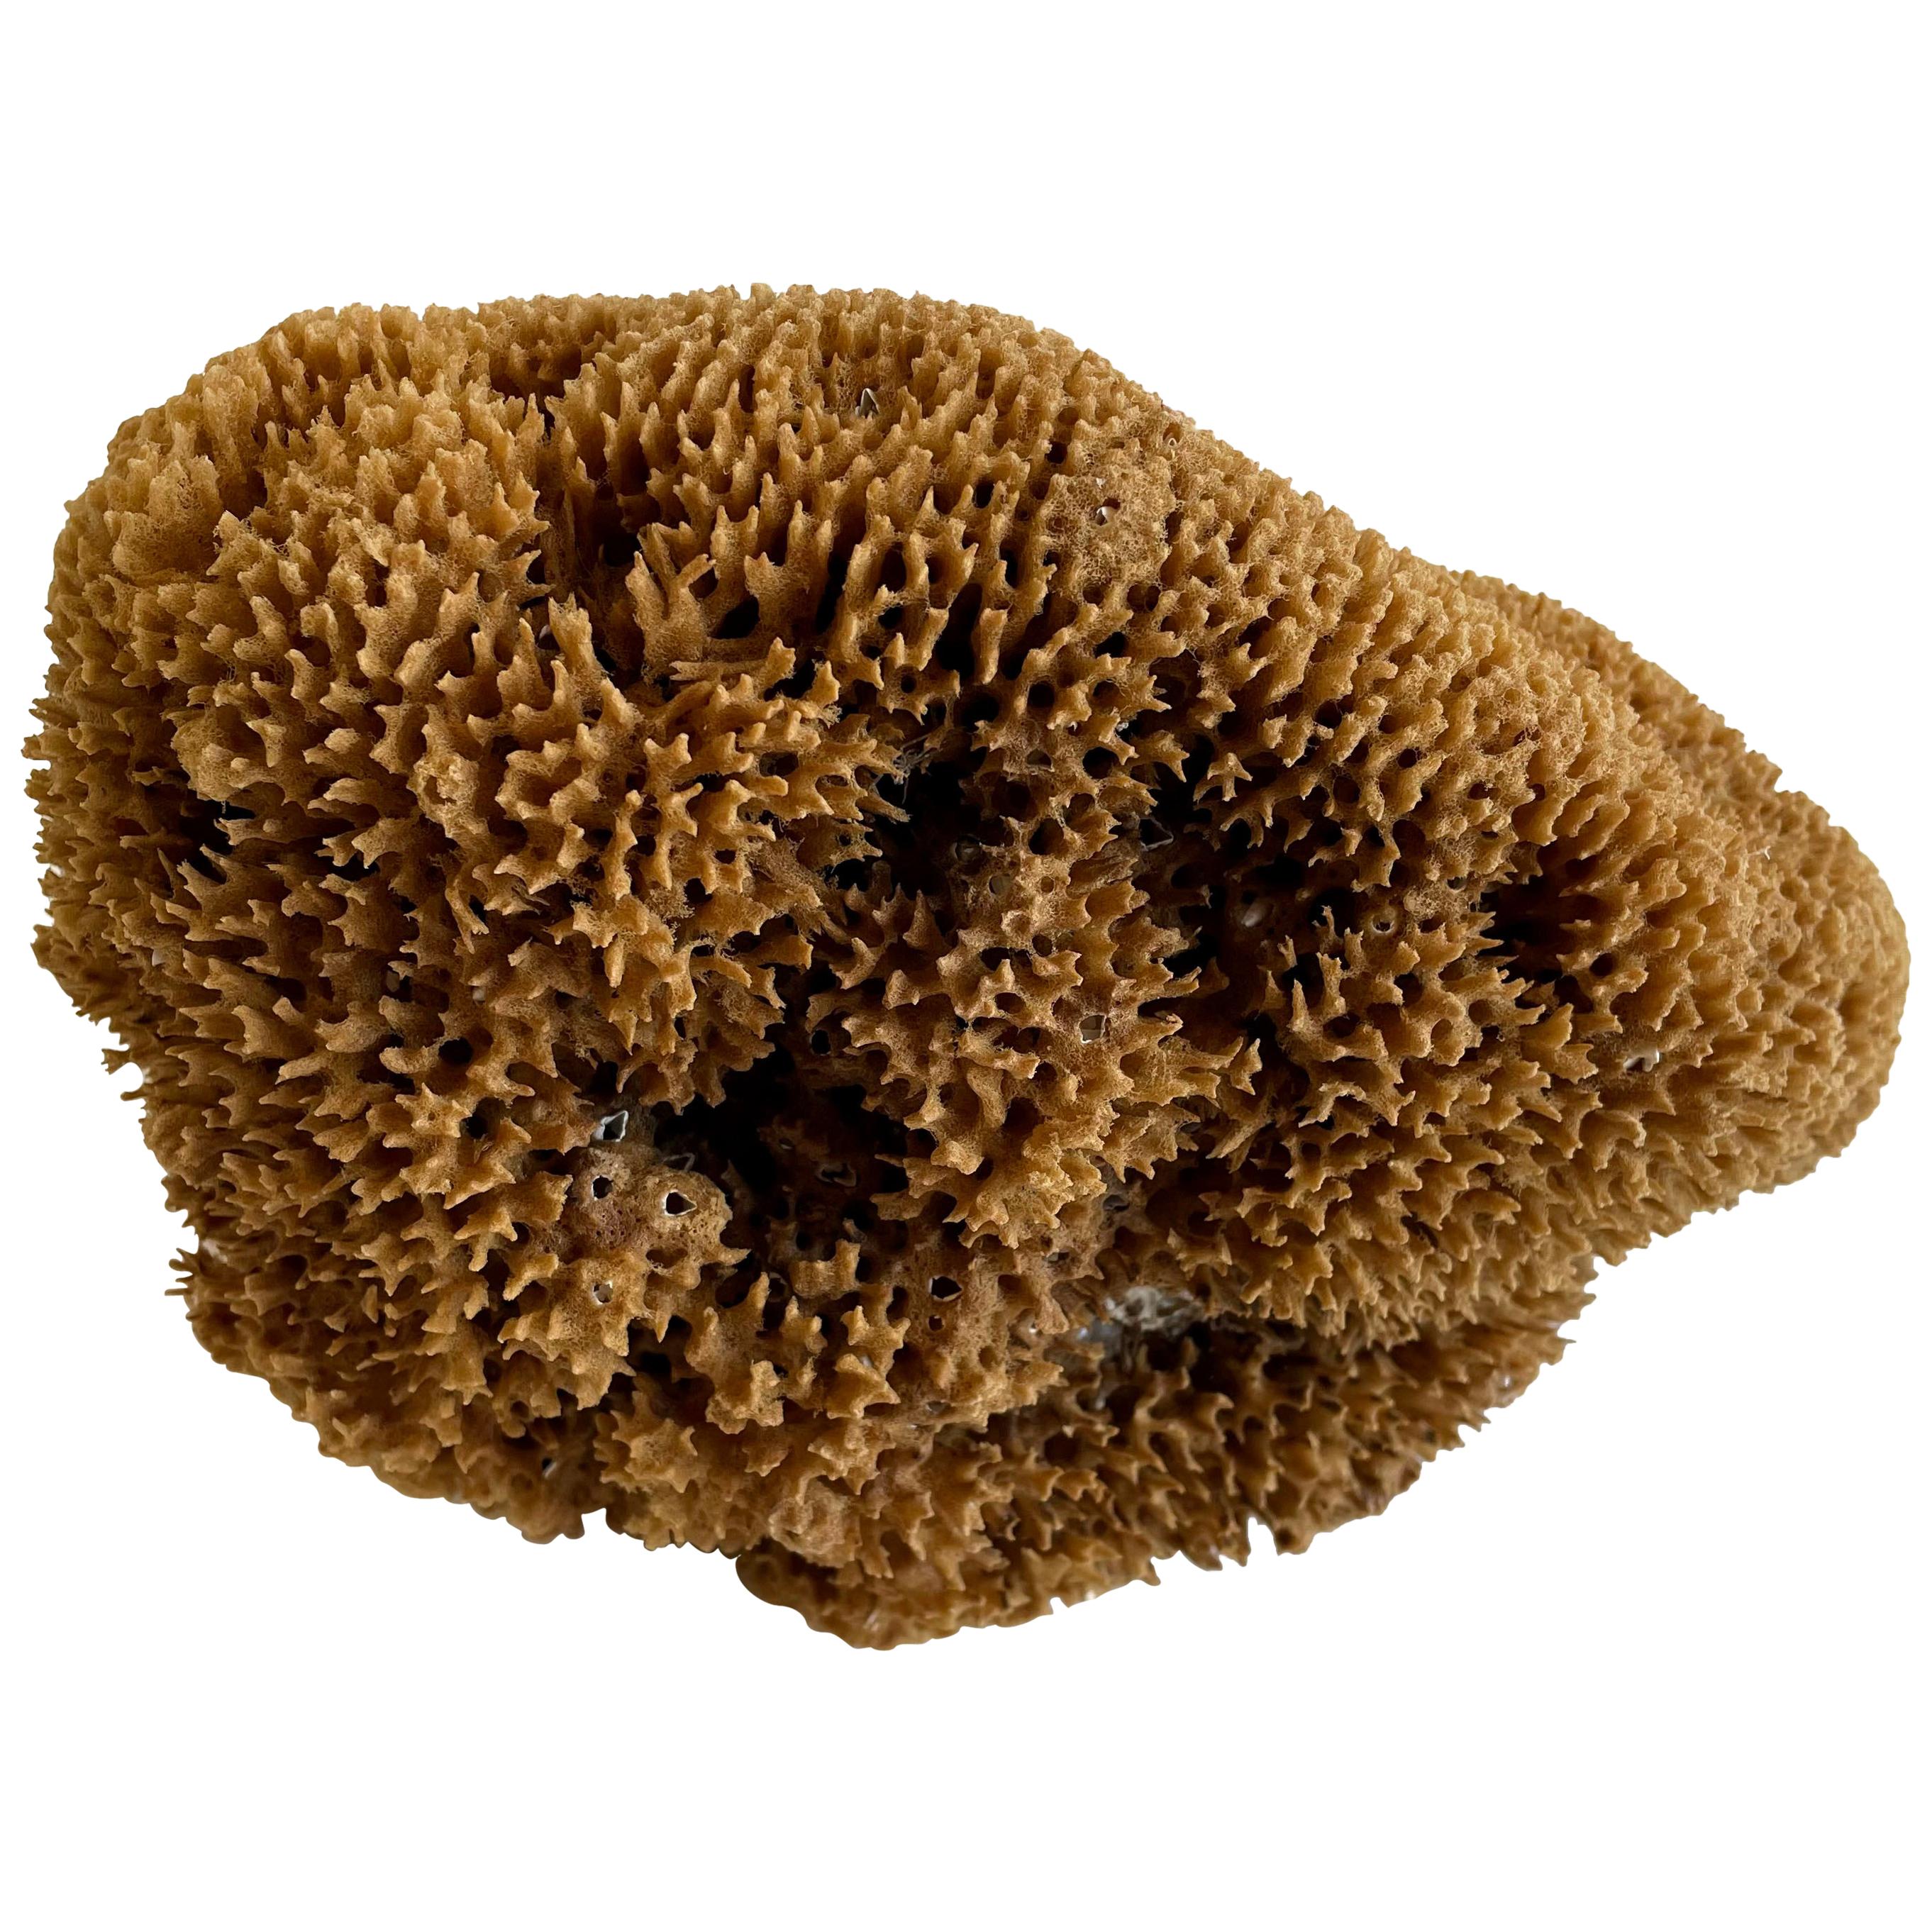 Natural Beautiful Shaped Natural Sea Sponge